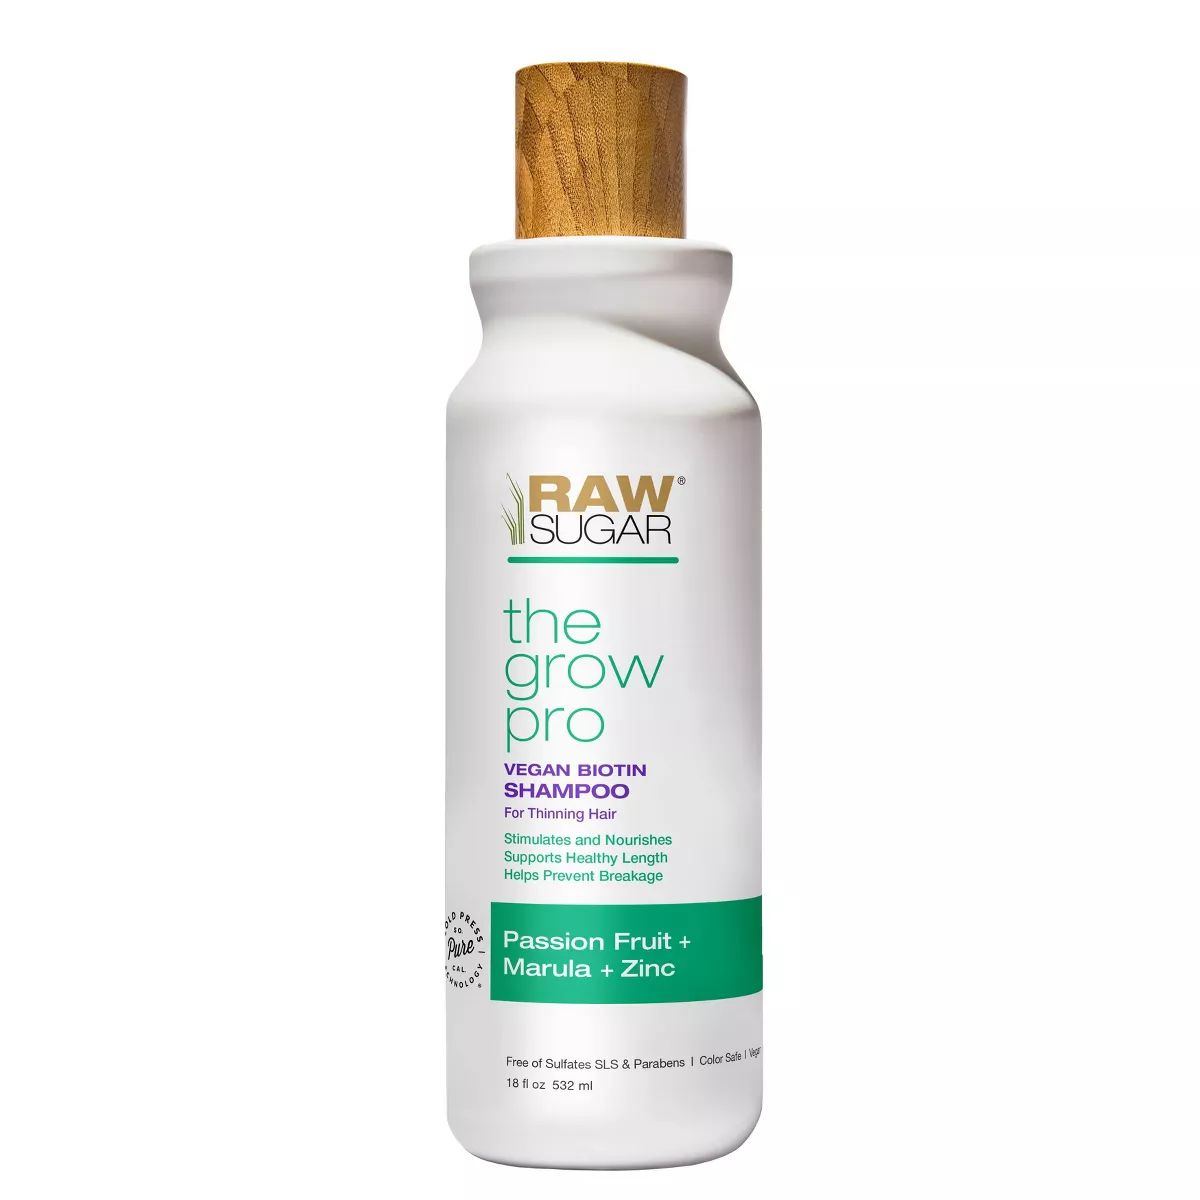 Raw Sugar Grow Pro Vegan Biotin Shampoo Infused with Passion Fruit + Zinc + Marula - 18 fl oz | Target